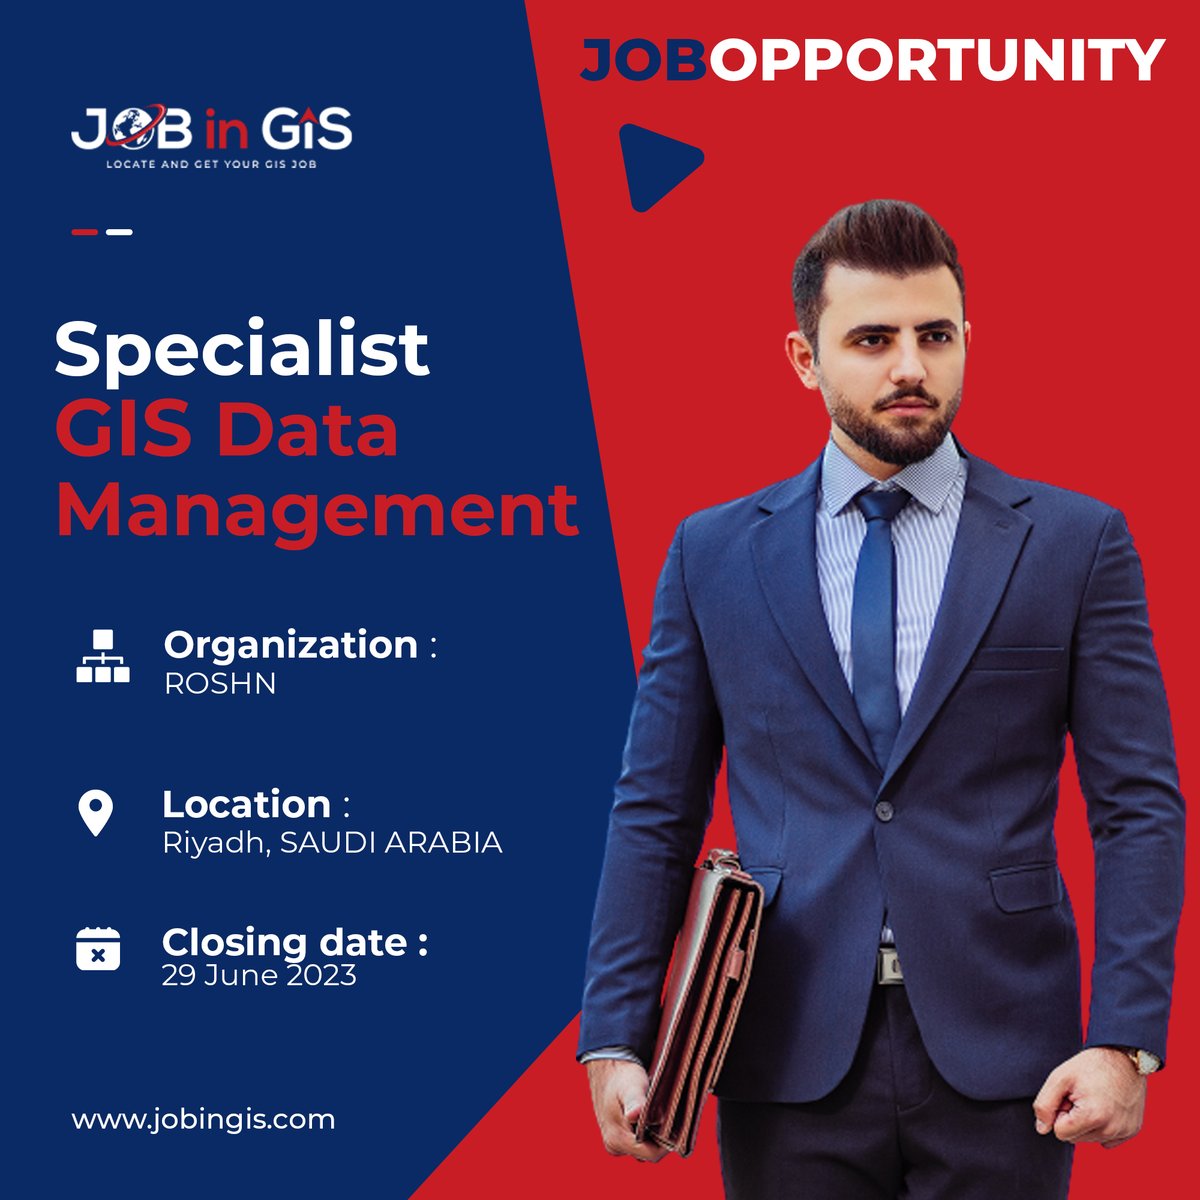 #jobingis : ROSHN is hiring a Specialist, GIS Data Management
📍Location : #Riyadh #SaudiArabia

Apply here 👉 : jobingis.com/jobs/specialis…

#Jobs #jobsearch #cartography #Geography #mapping #GIS #geospatial #remotesensing #gisjobs #gischat